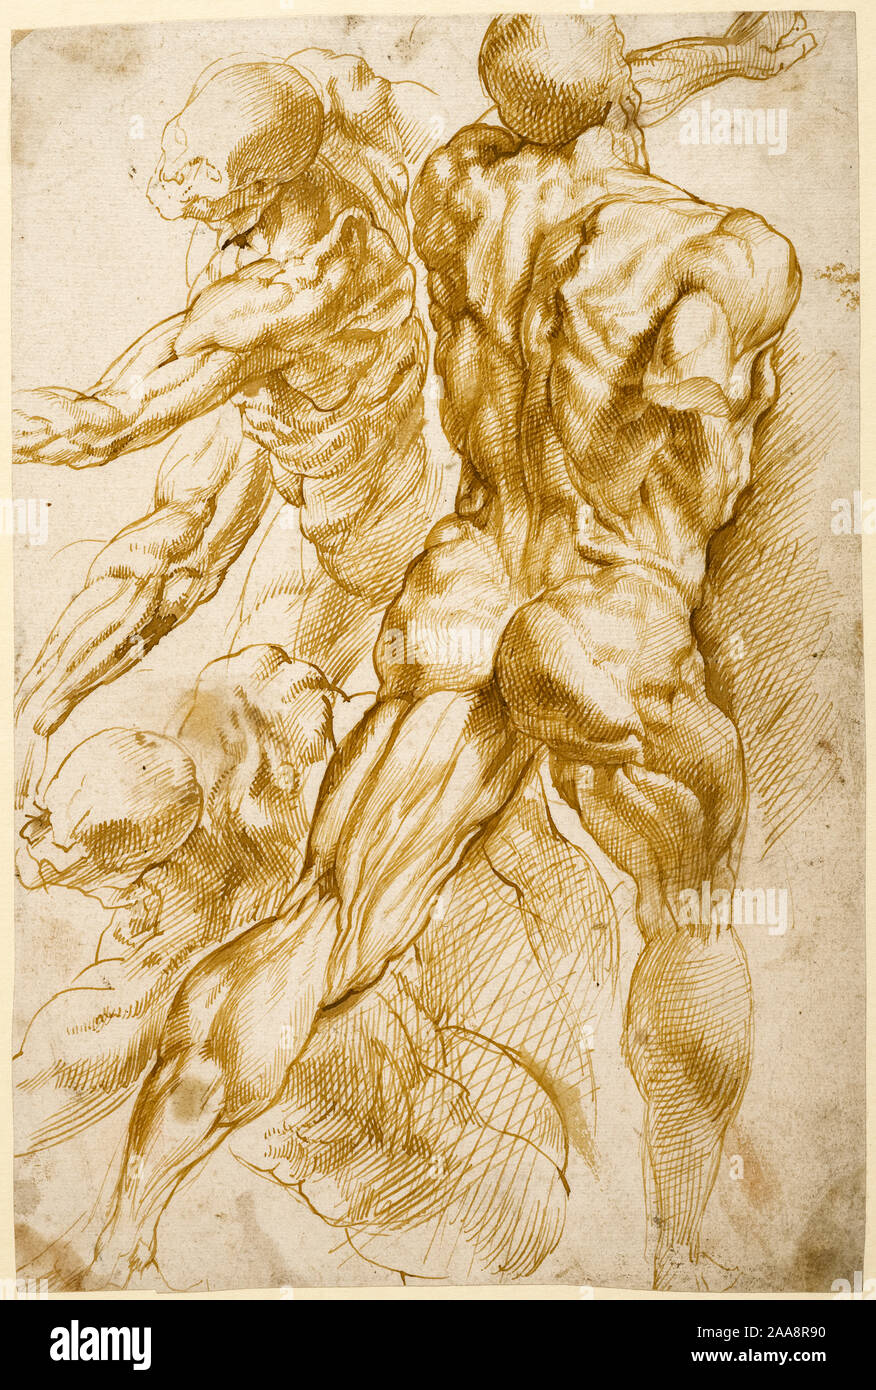 Peter Paul Rubens, estudios anatómicos, dibujo, 1600-1605 Foto de stock